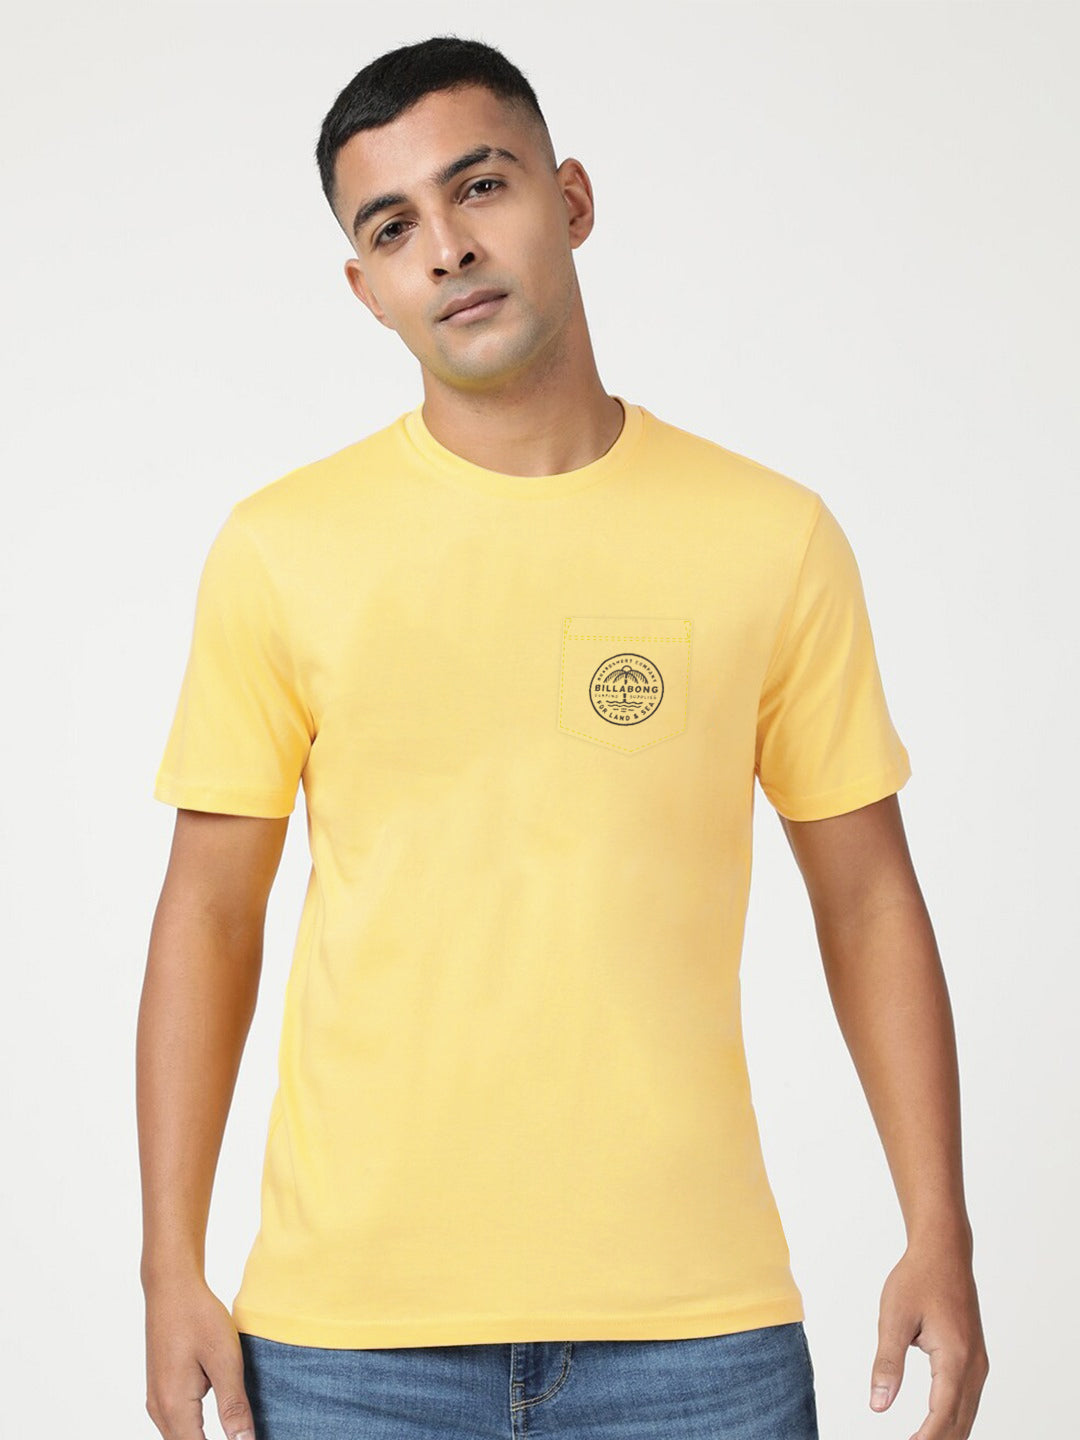 BilaBong Single Jersey Crew Neck Tee Shirt For Men-Yellow-BE1039